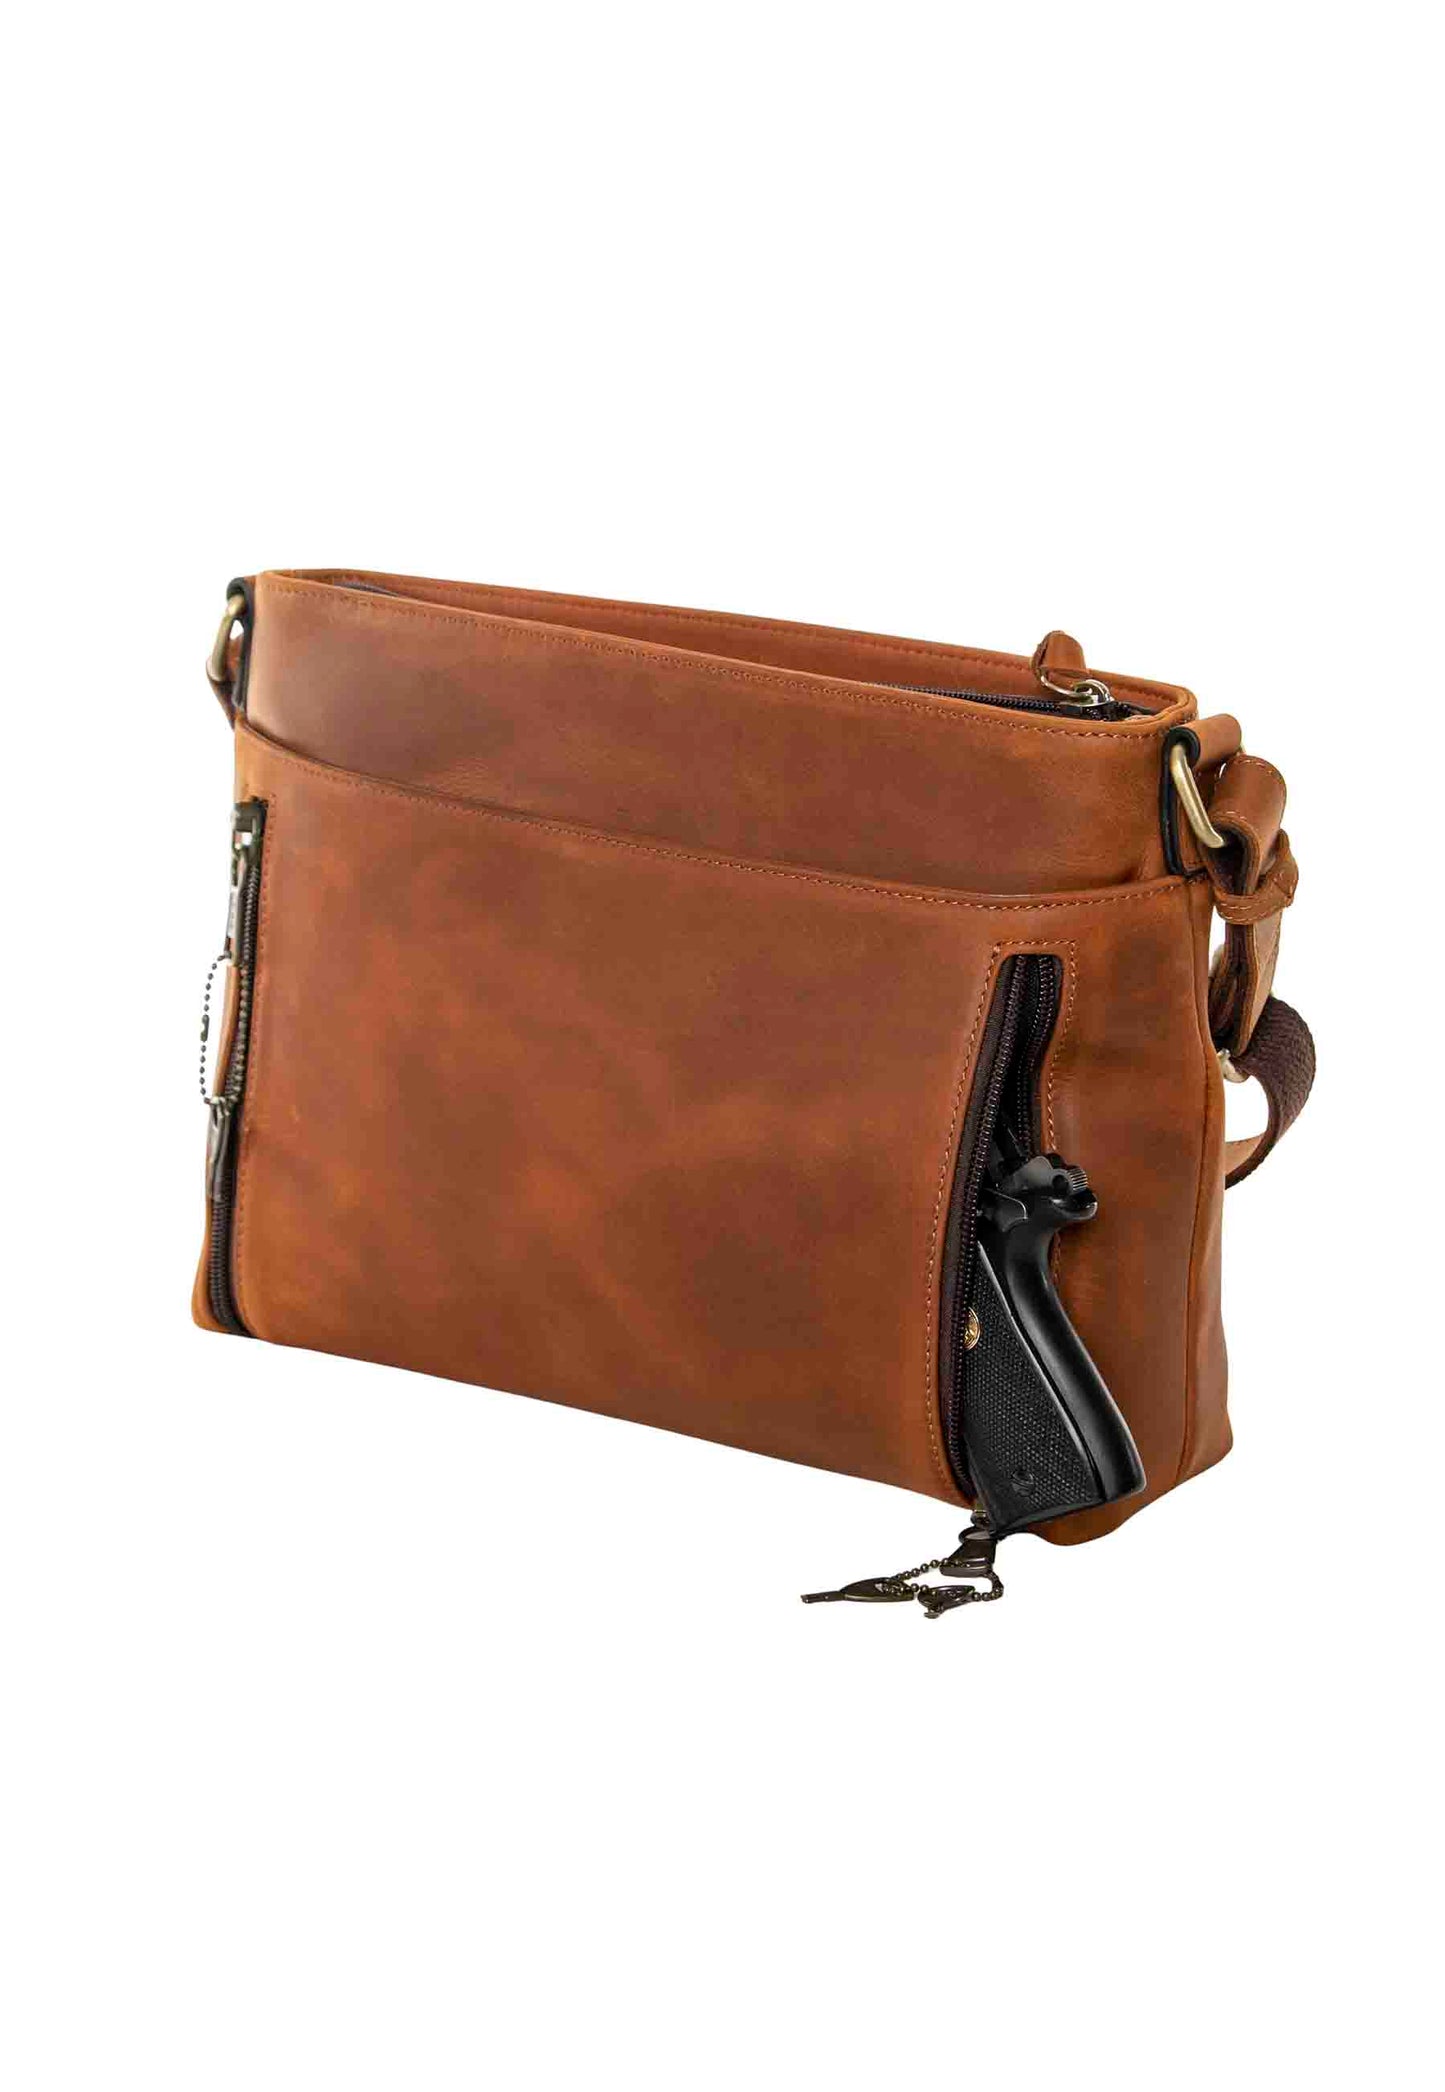 Josie leather pistol purse